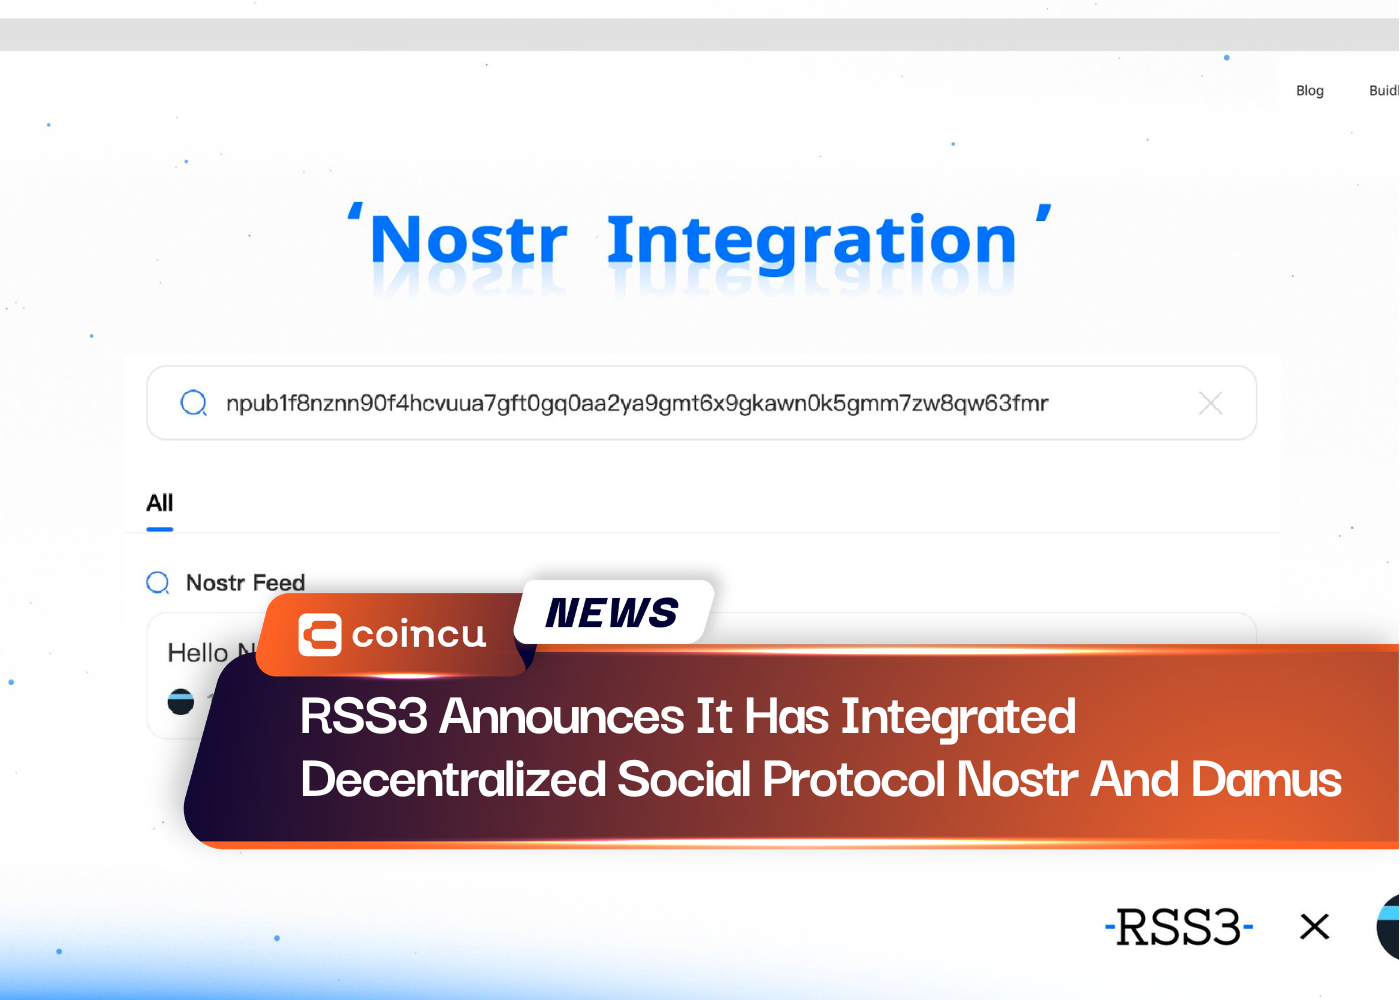 RSS3 Announces It Has Integrated Decentralized Social Protocol Nostr And Damus